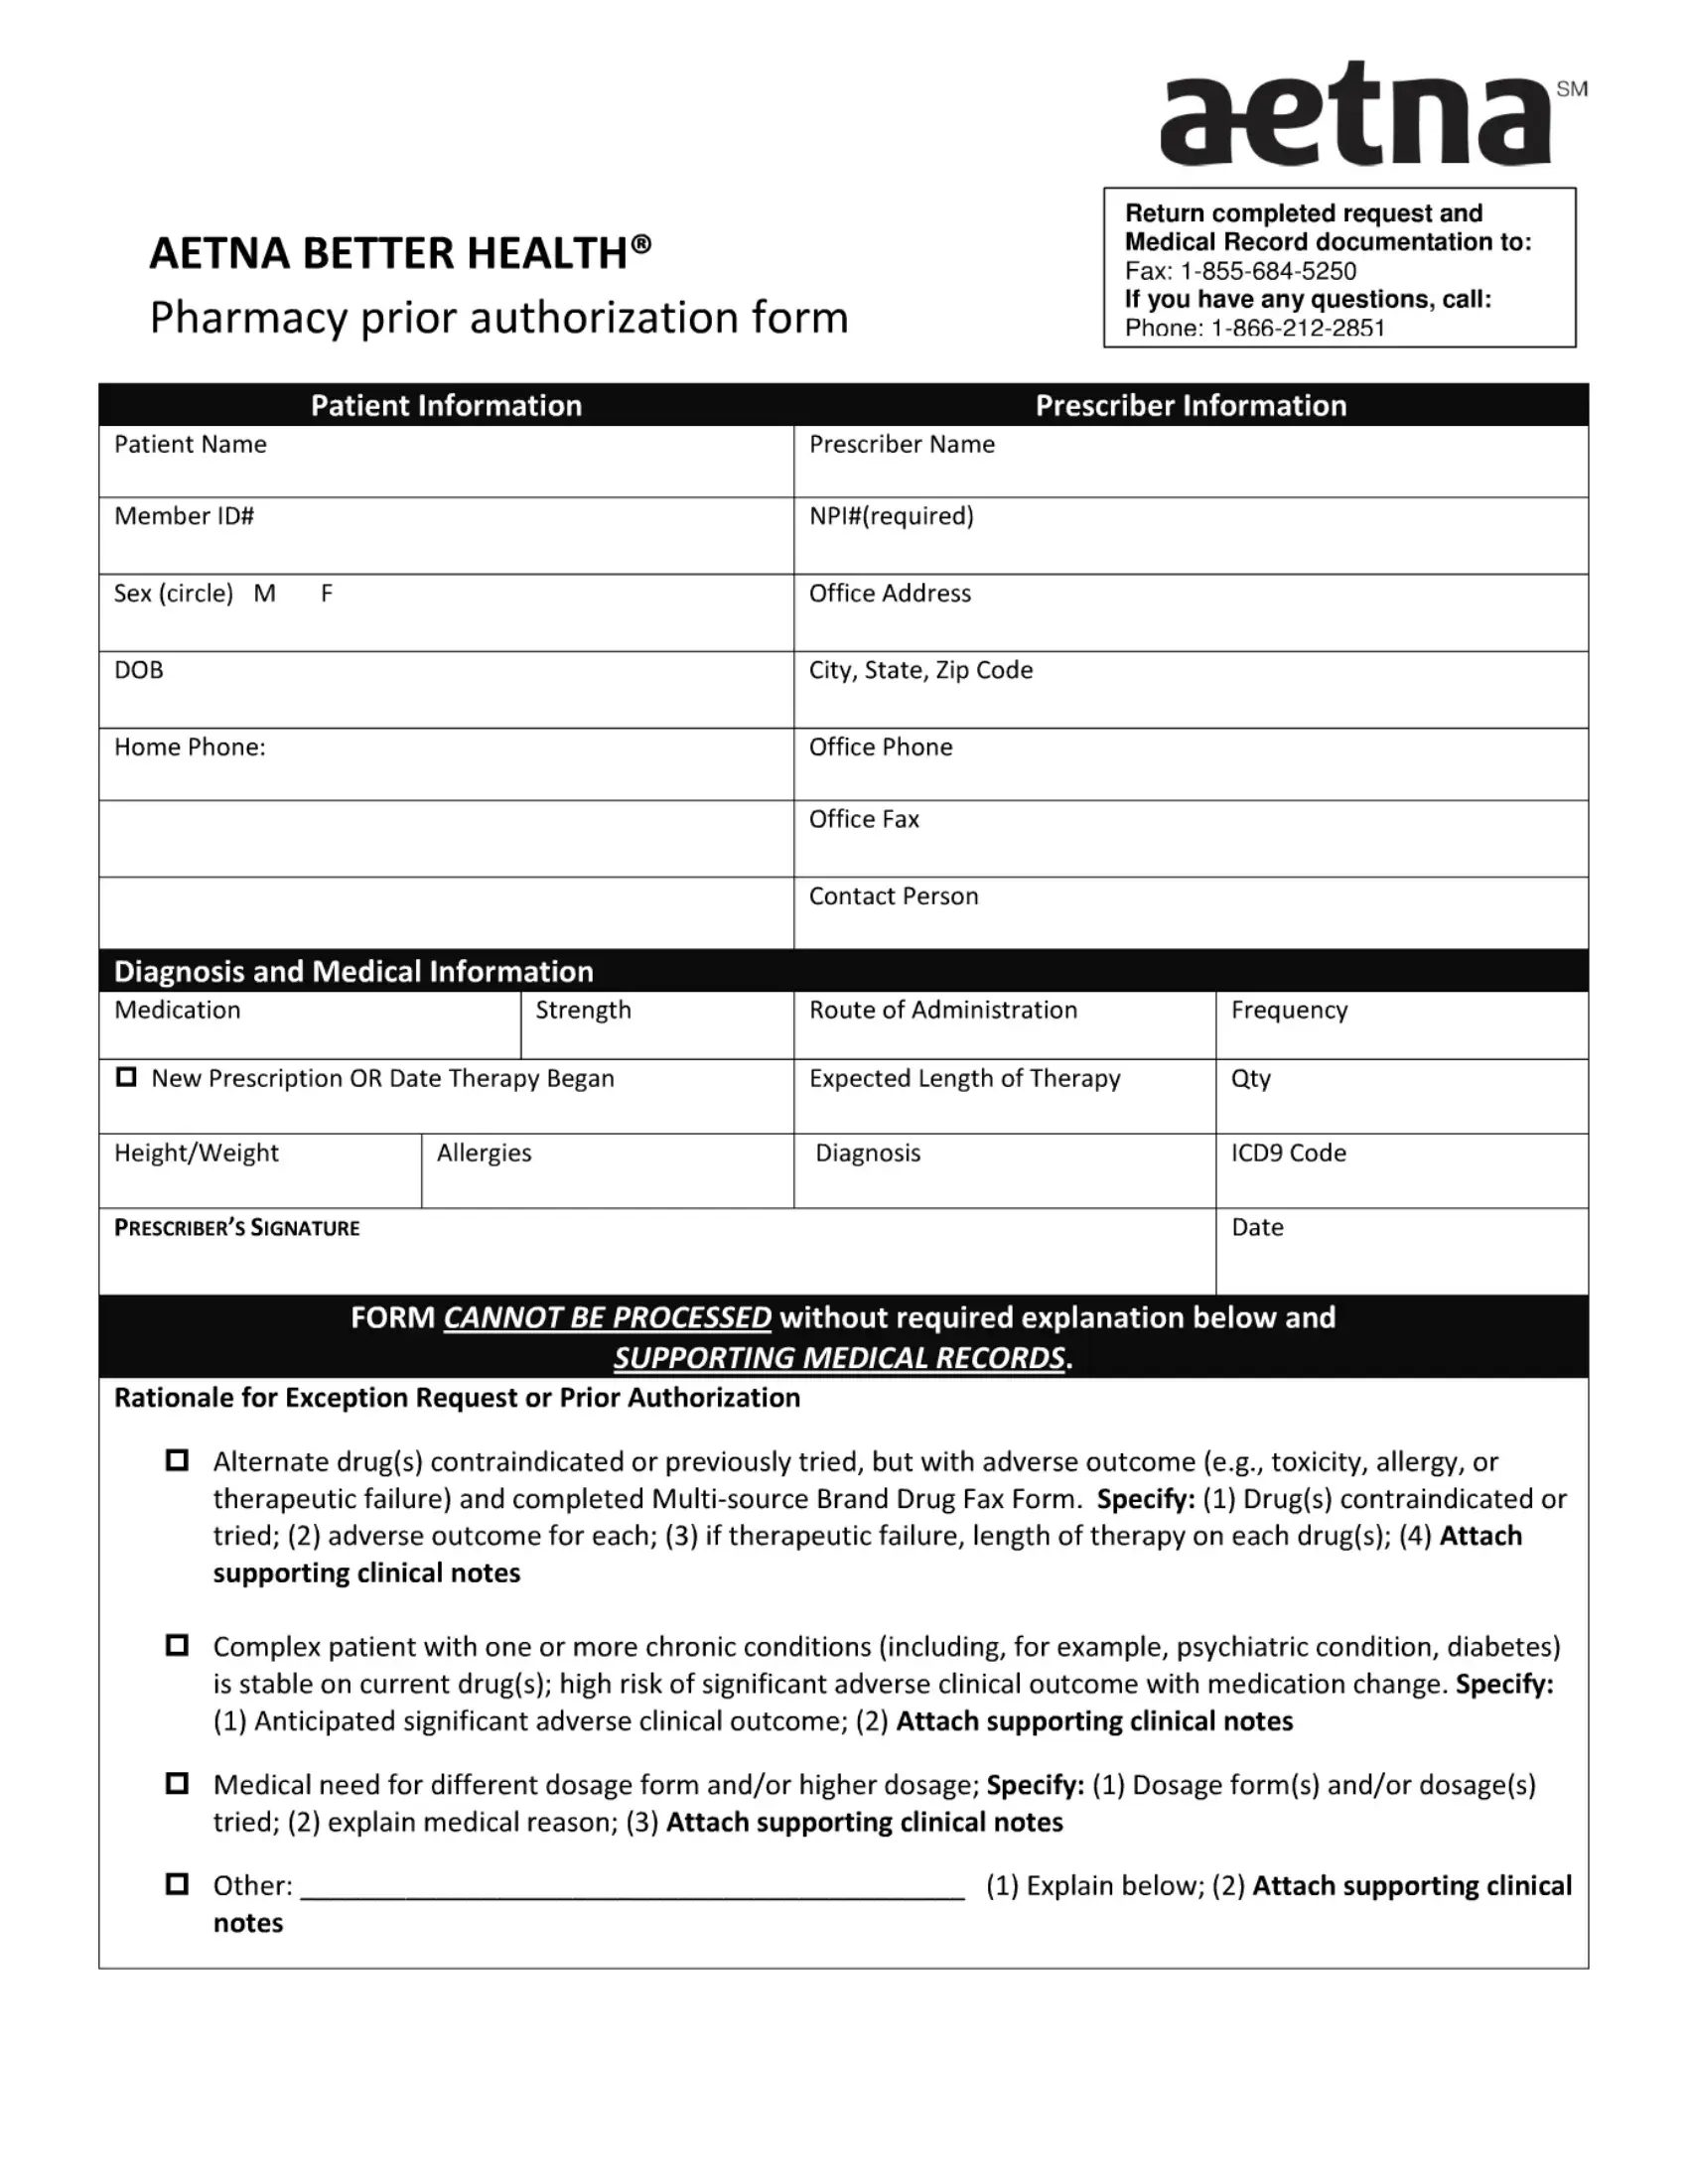 aetna-pharmacy-prior-authorization-pdf-form-formspal